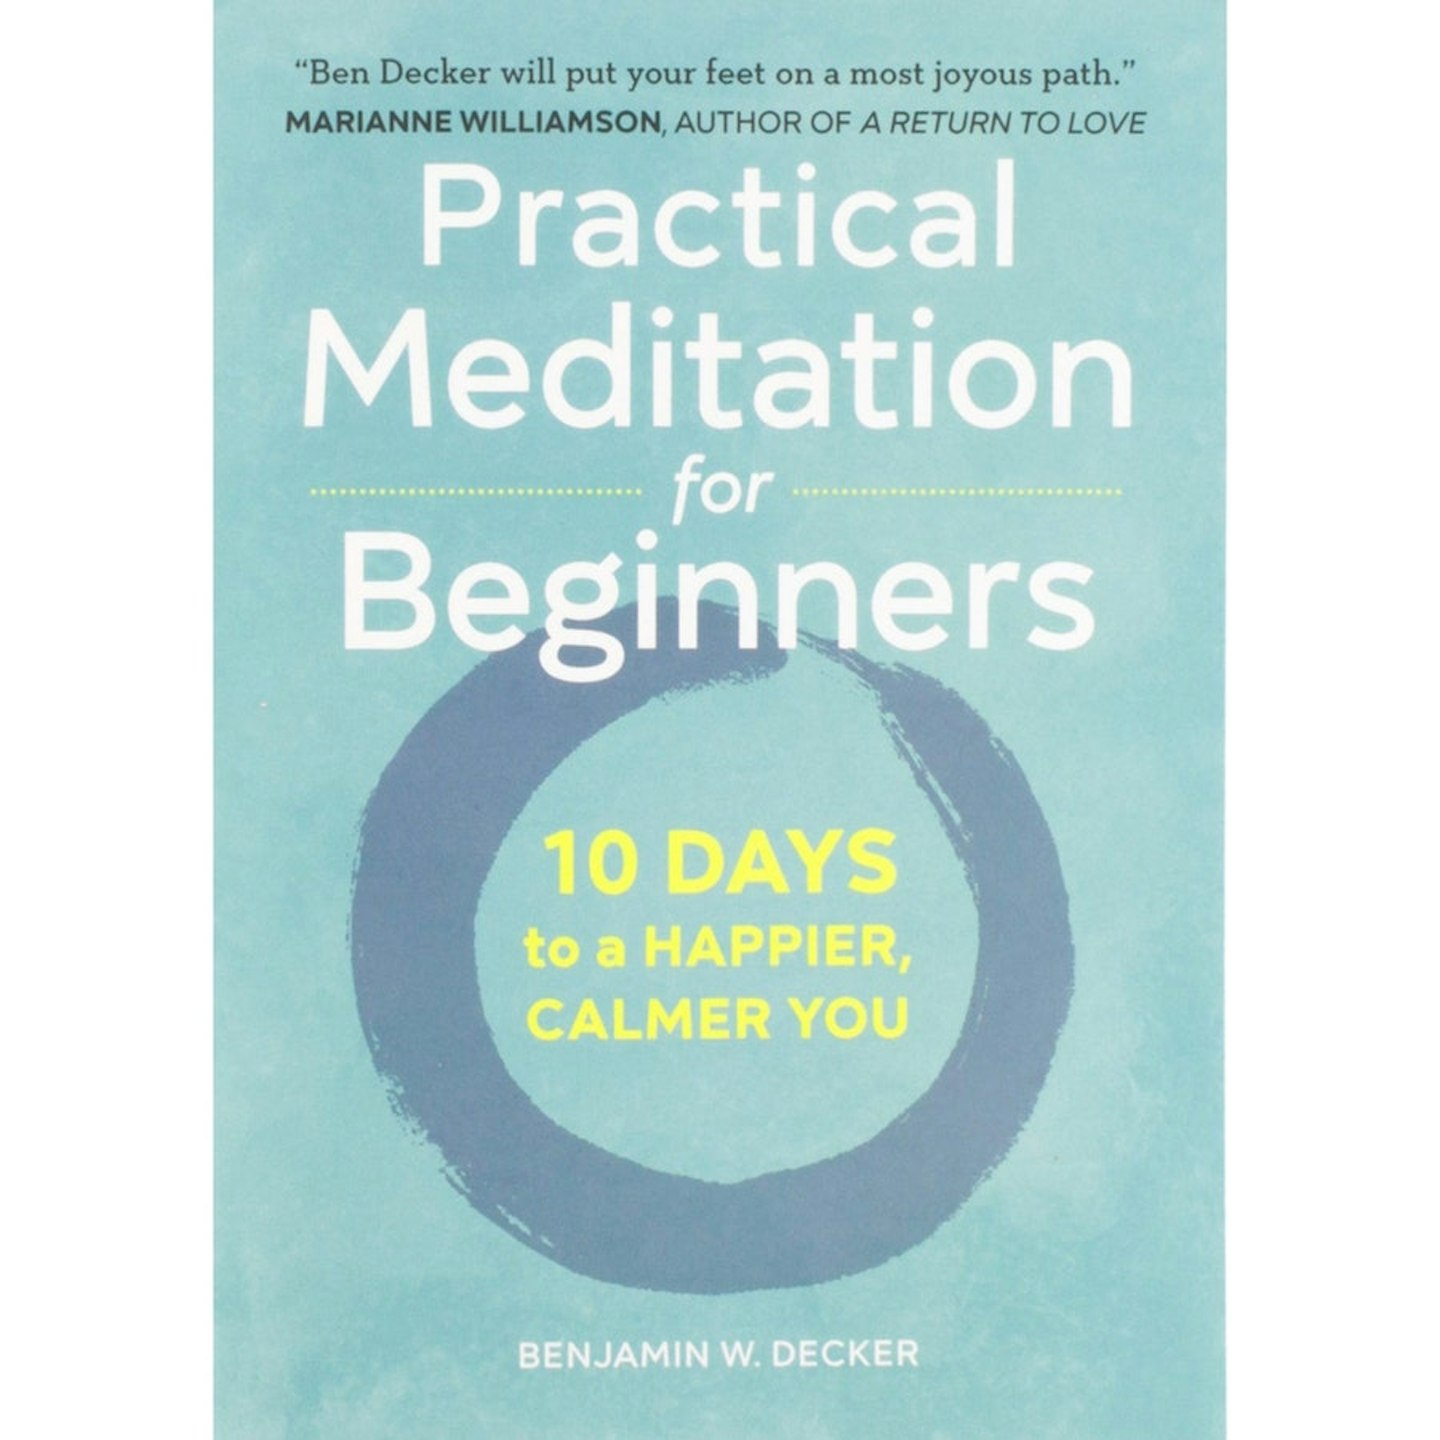 Practical Meditation for Beginners by Benjamin W. Decker